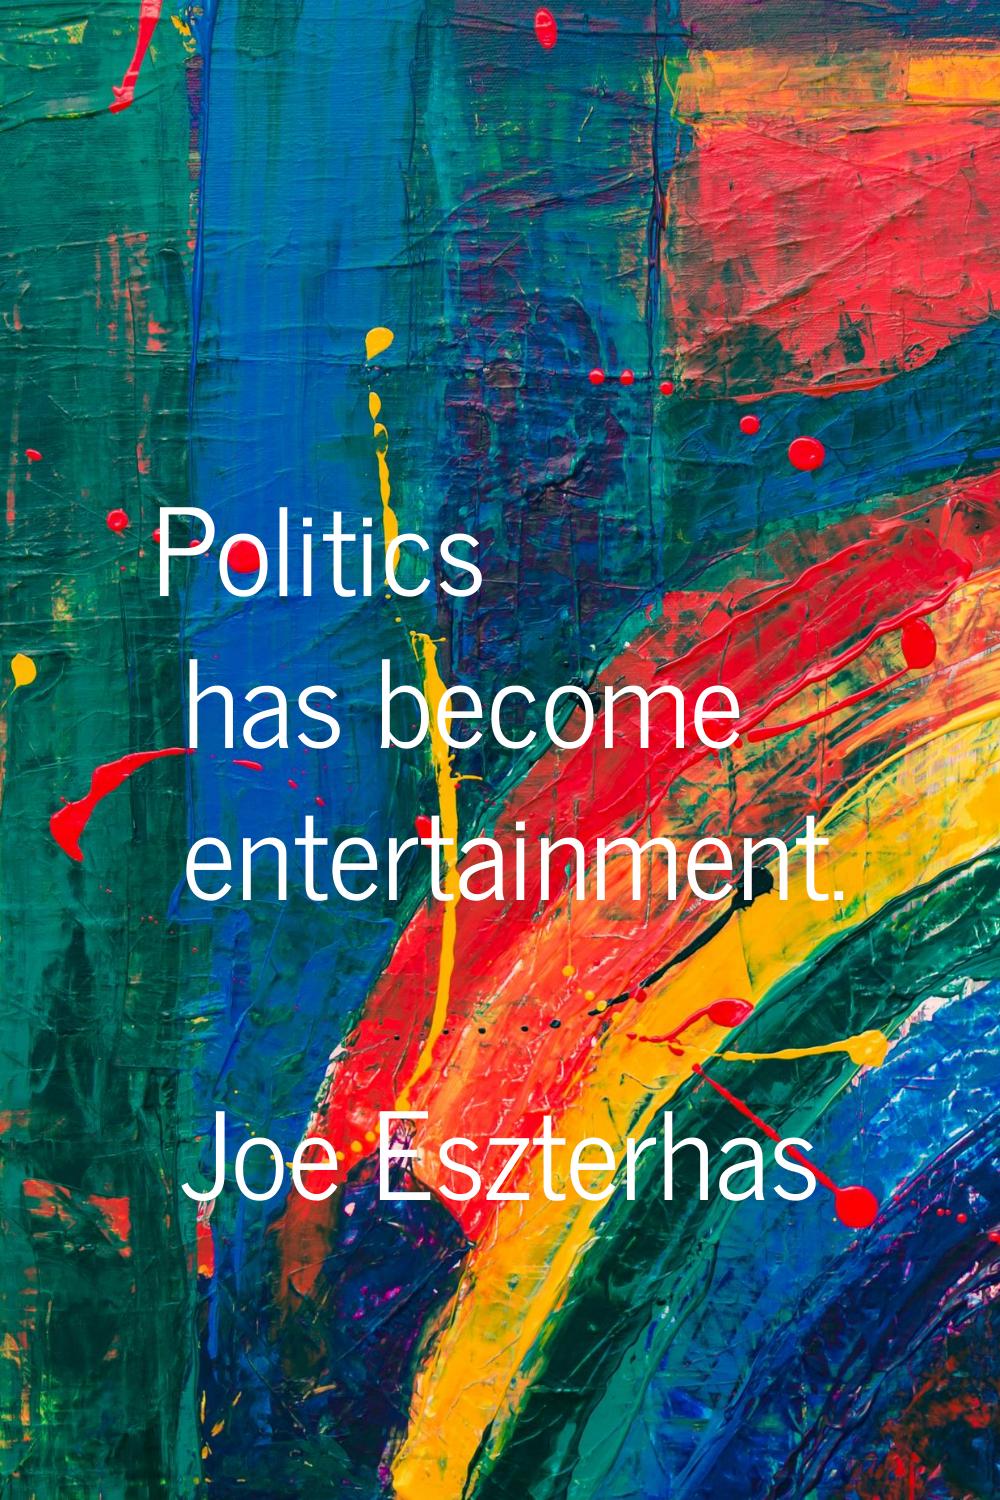 Politics has become entertainment.